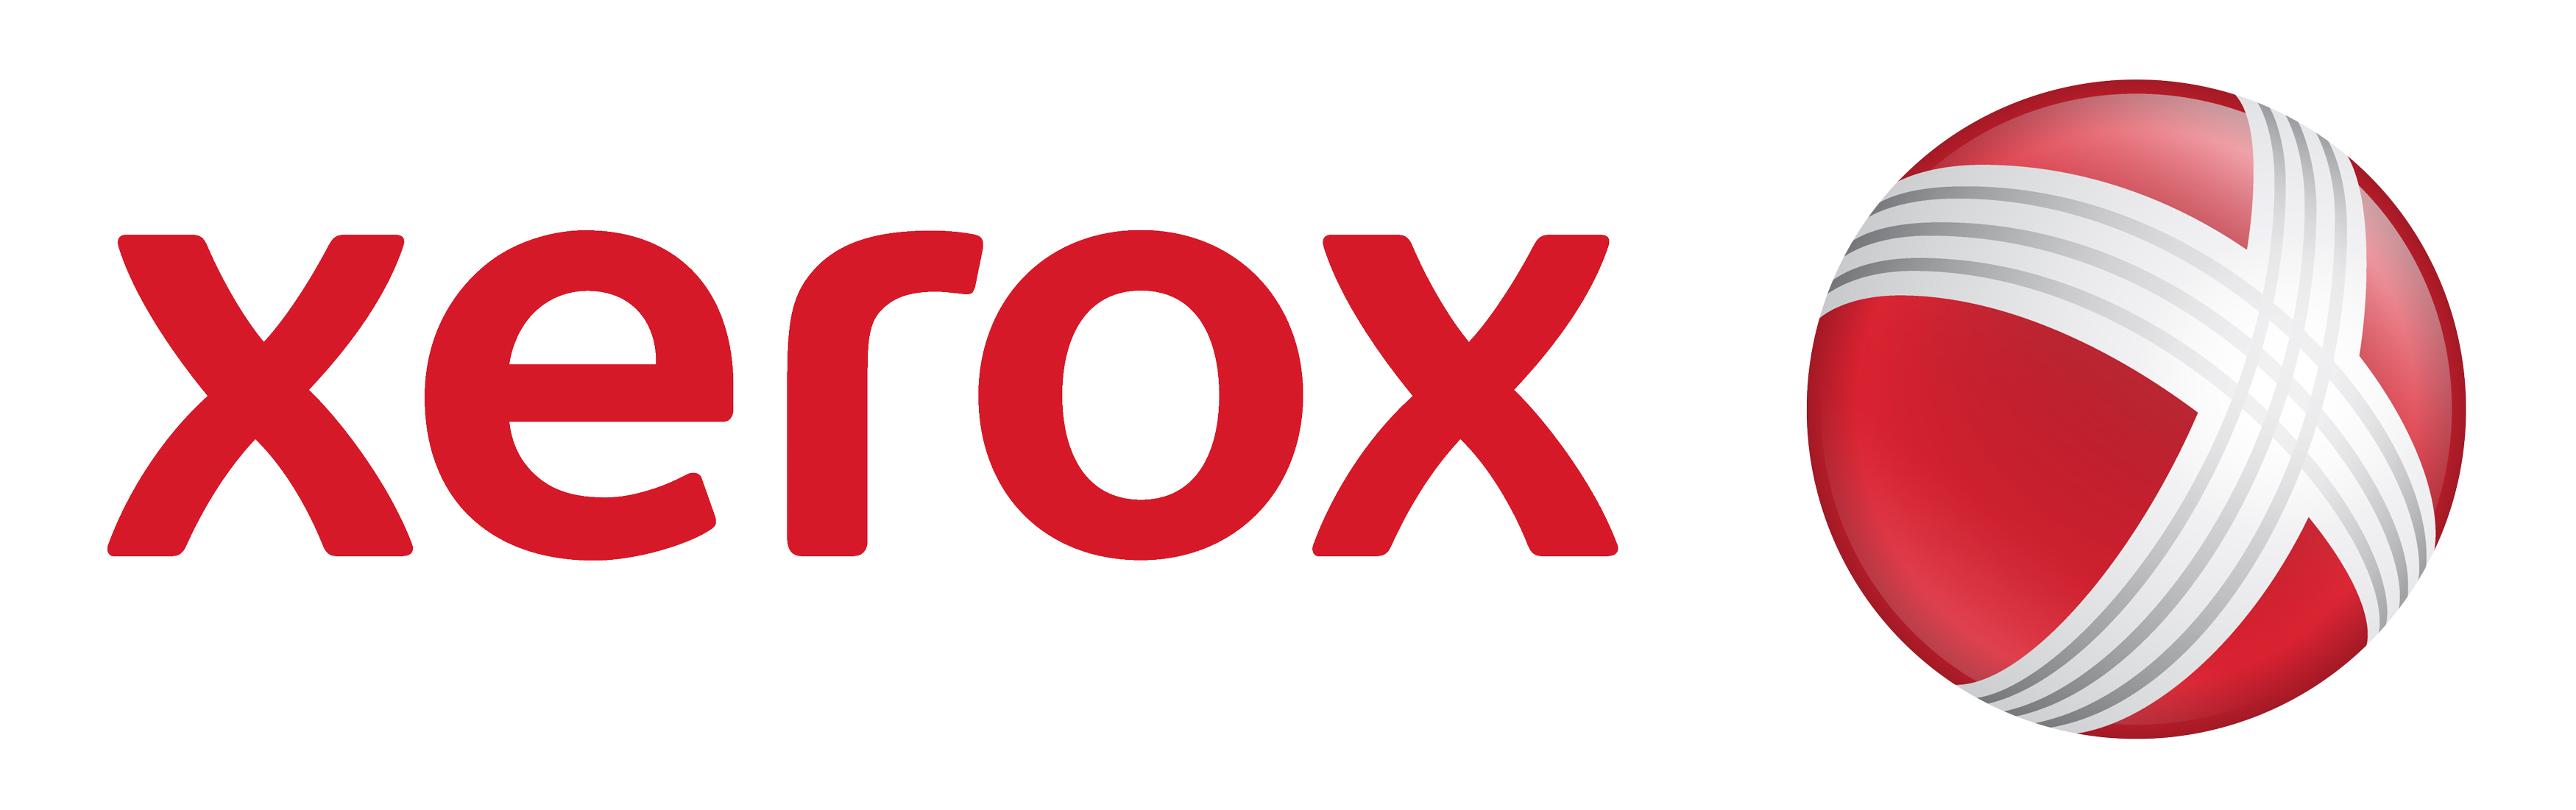 XEROX-LOGO-3